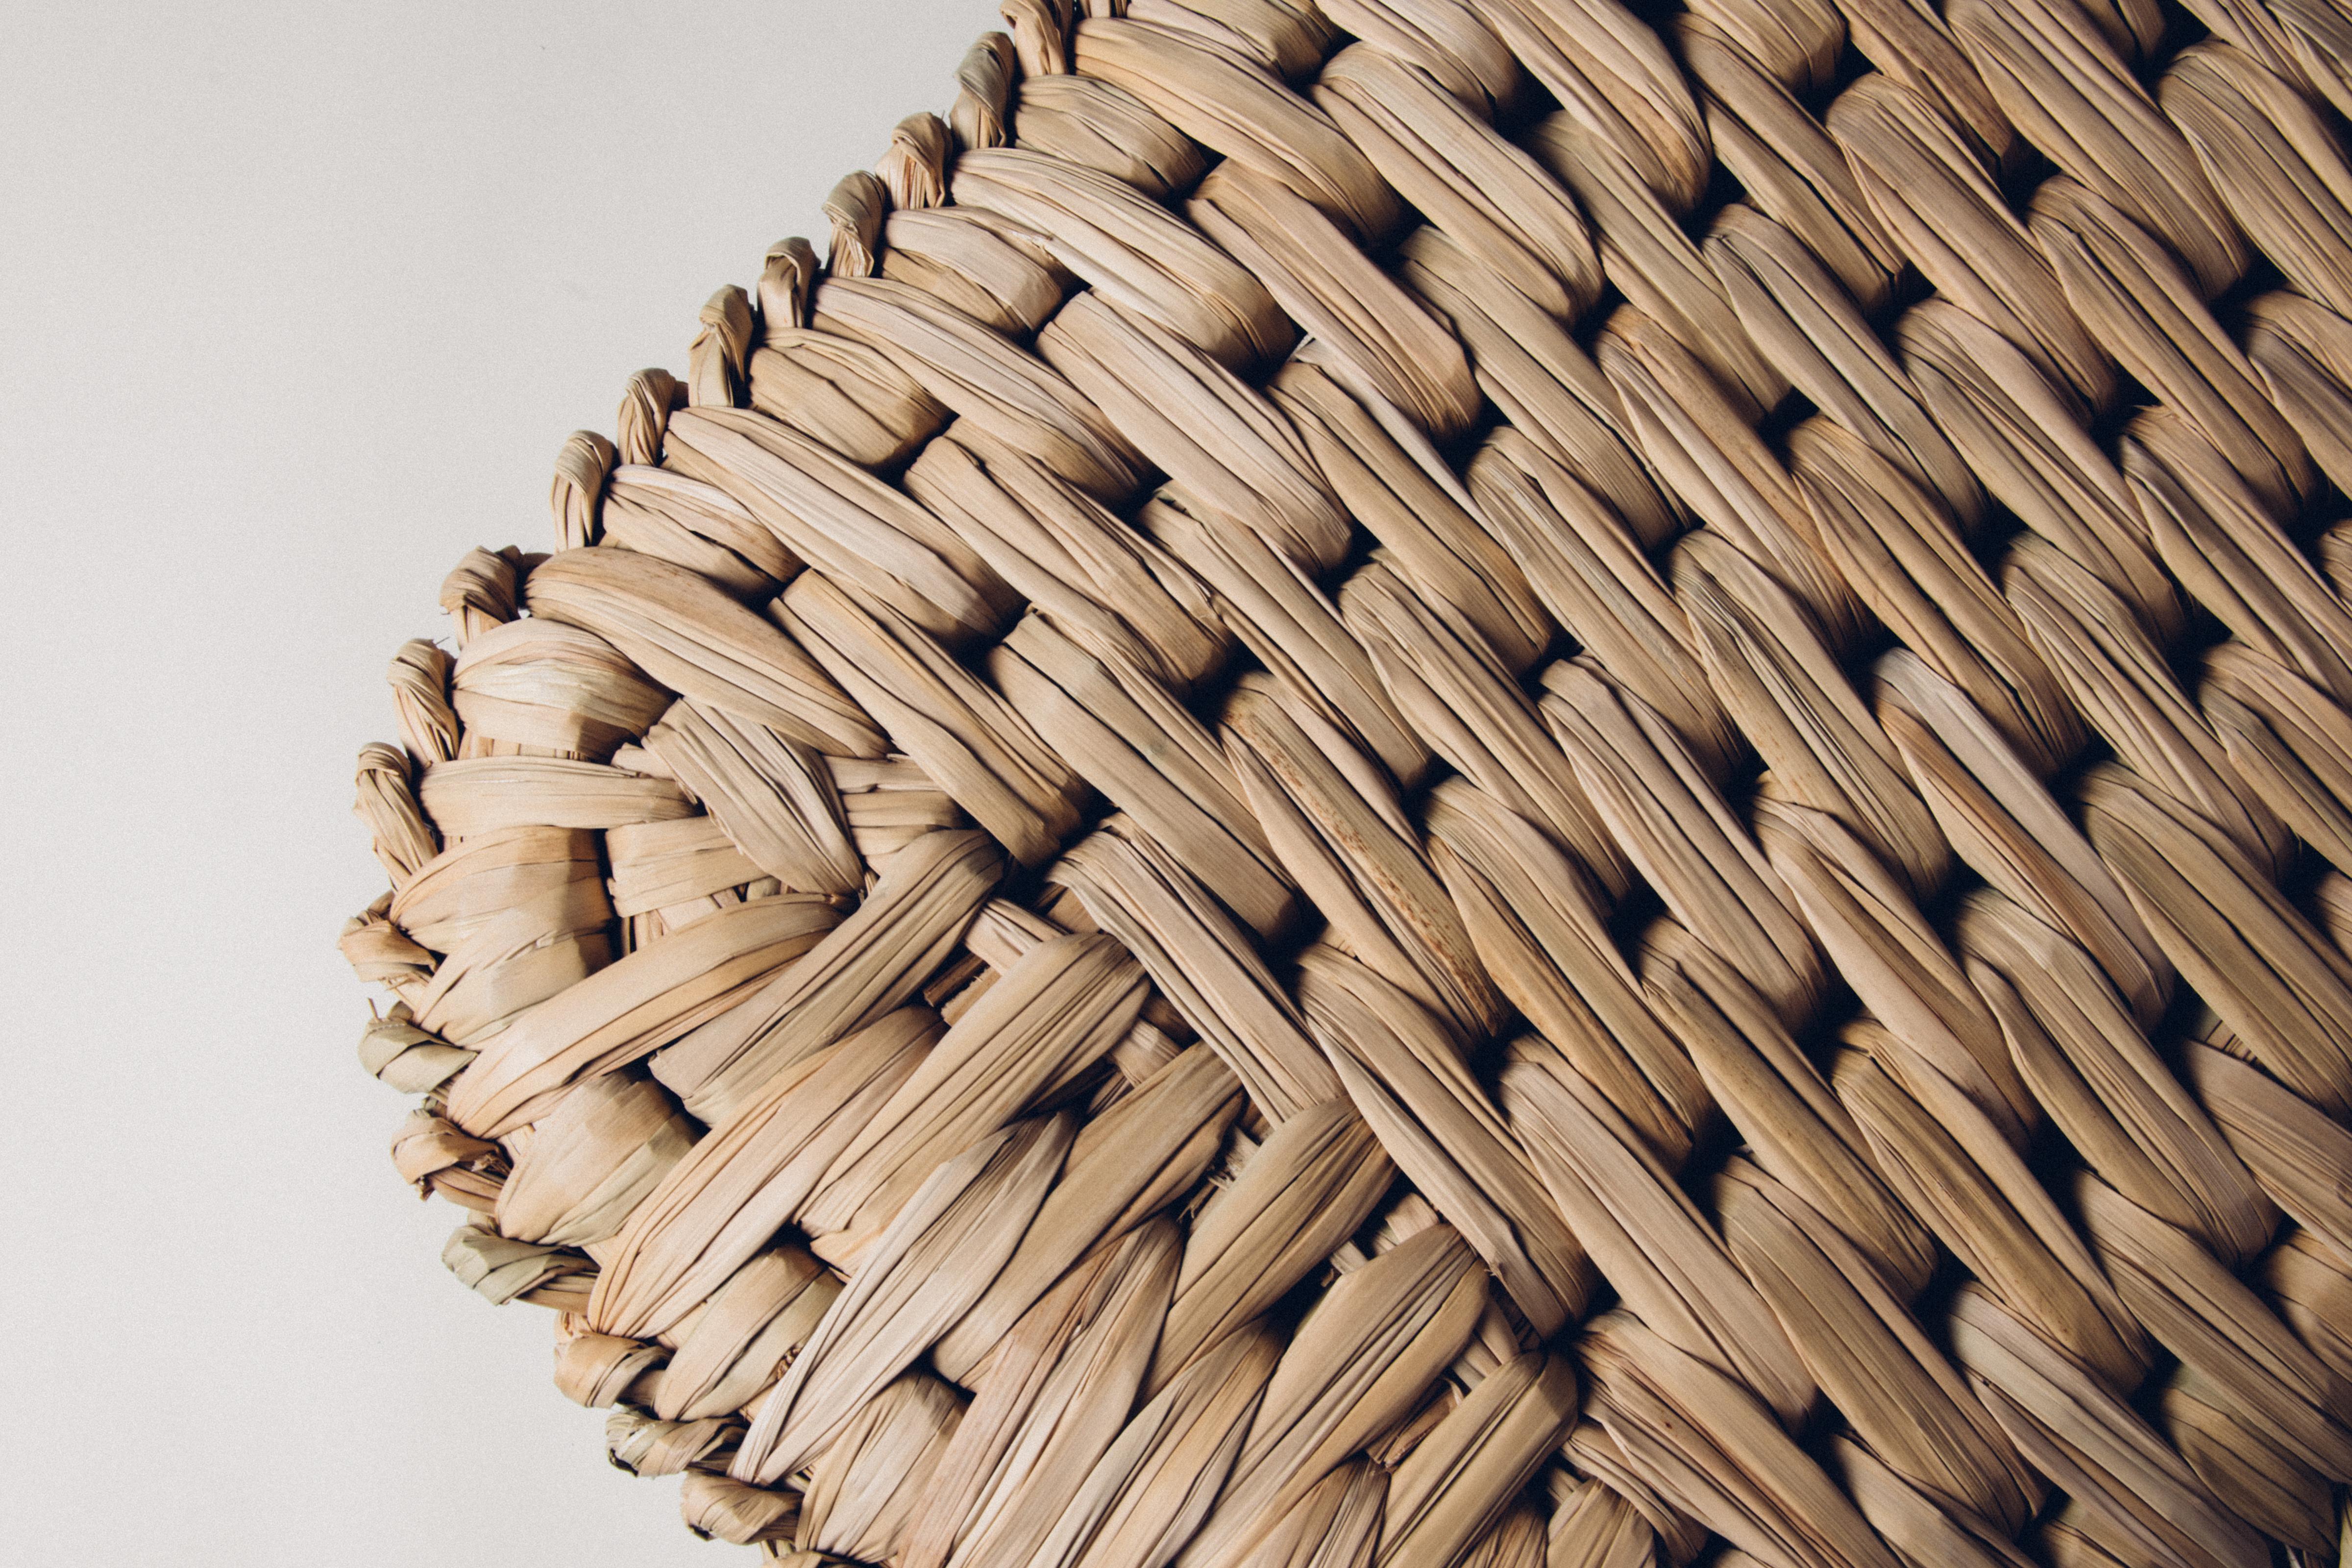 Woven Tule 'Icpalli' Bench made in Mexico from LUTECA (Handgewebt)